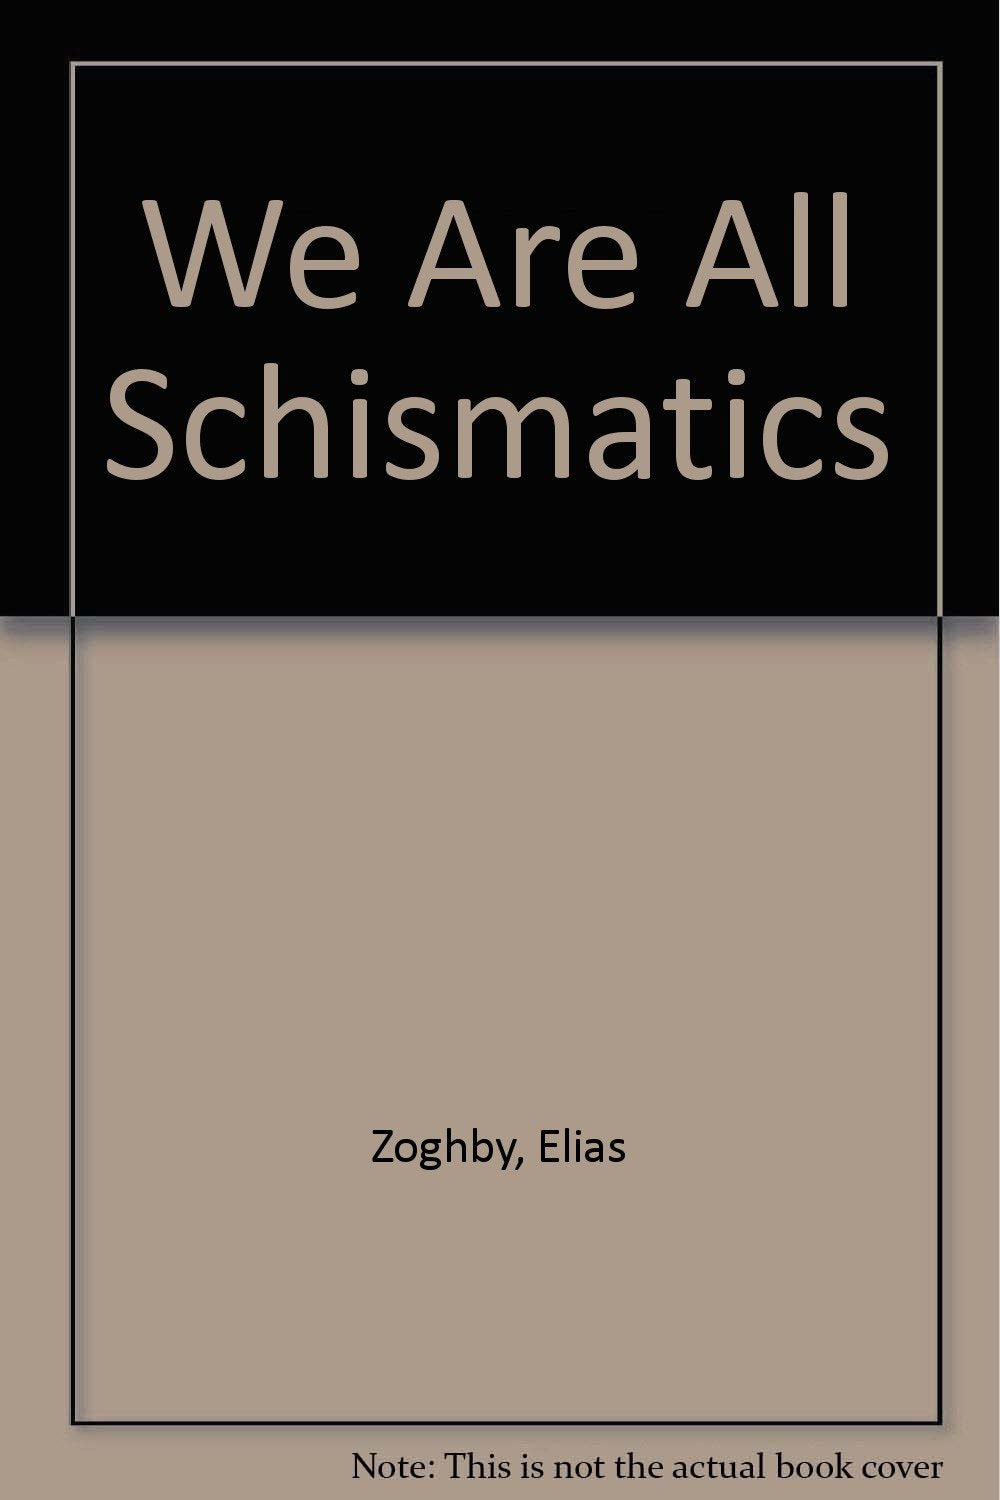 We Are All Schismatics Zoghby, Elias